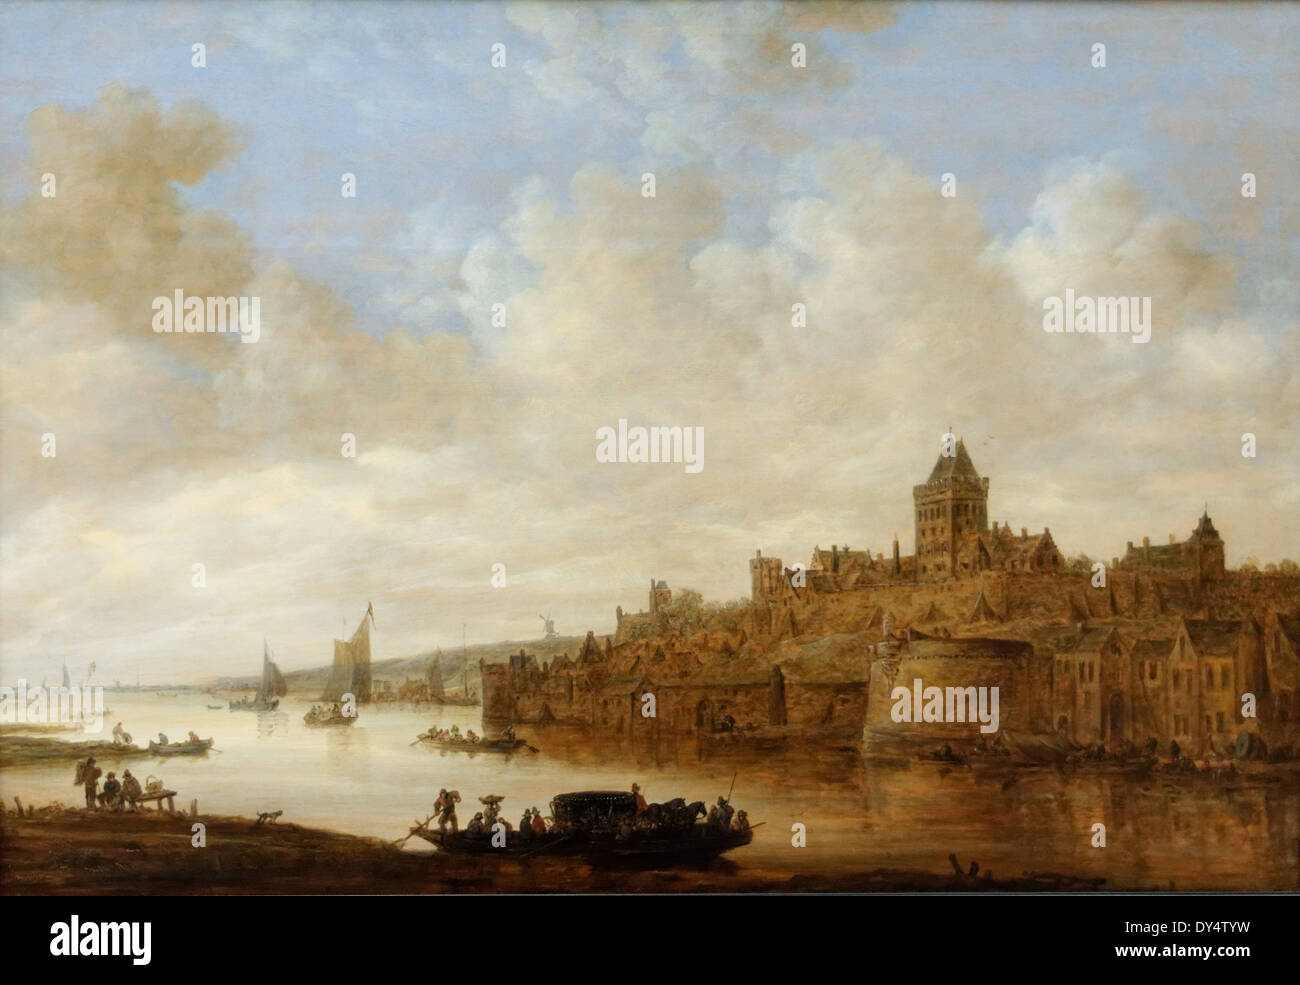 Jan van Goyen - View on Nijmegen - 1649 - XVII th Century - Flemish School - Gemäldegalerie - Berlin Stock Photo